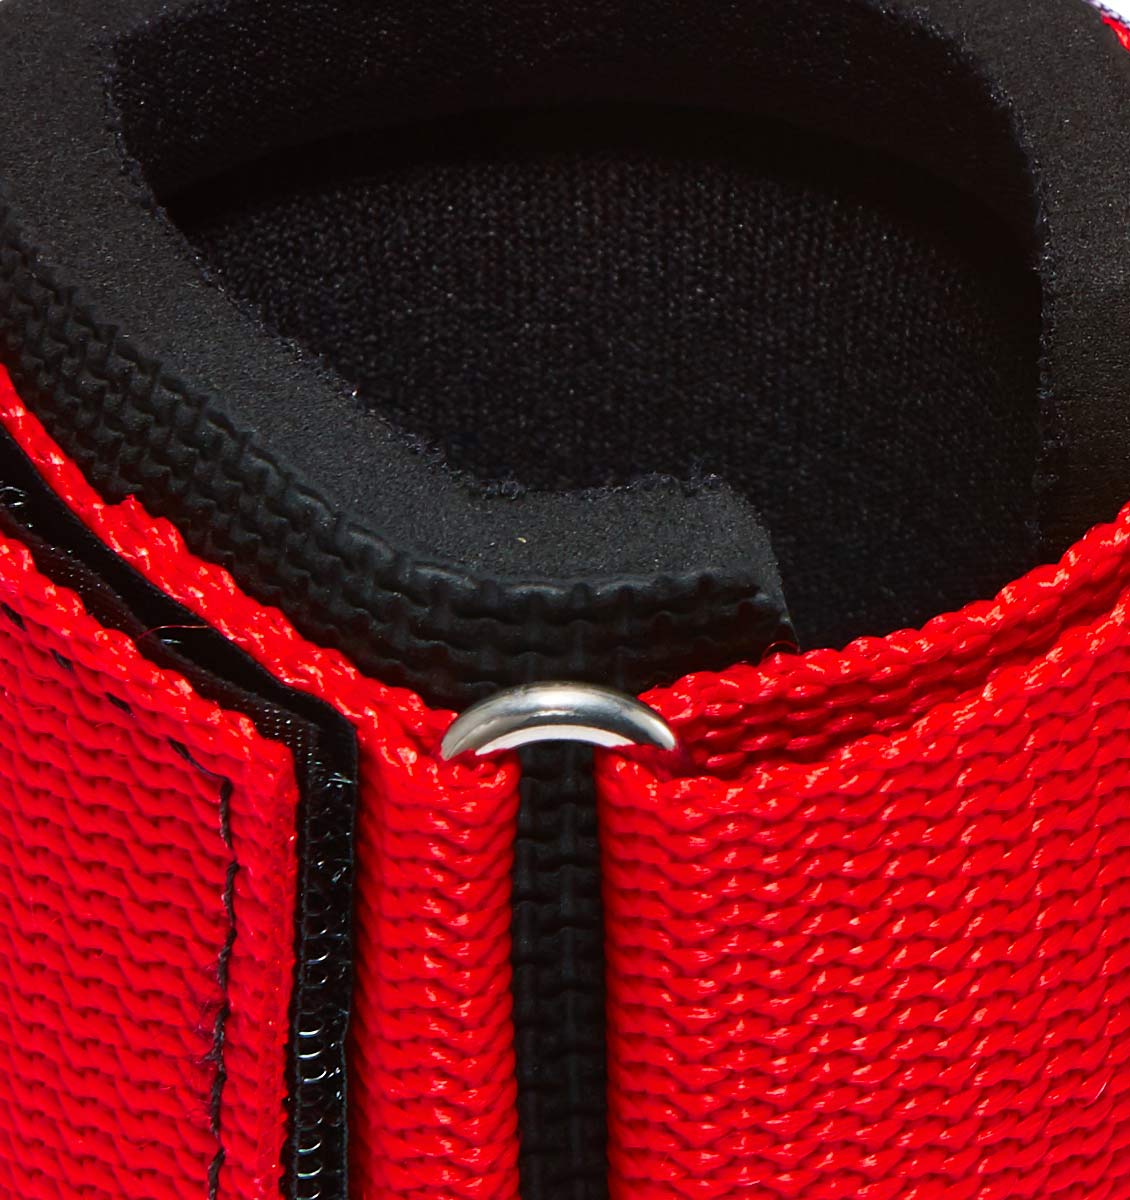 1100 Schiek Wrist Supports Straps Red Strap Close Up